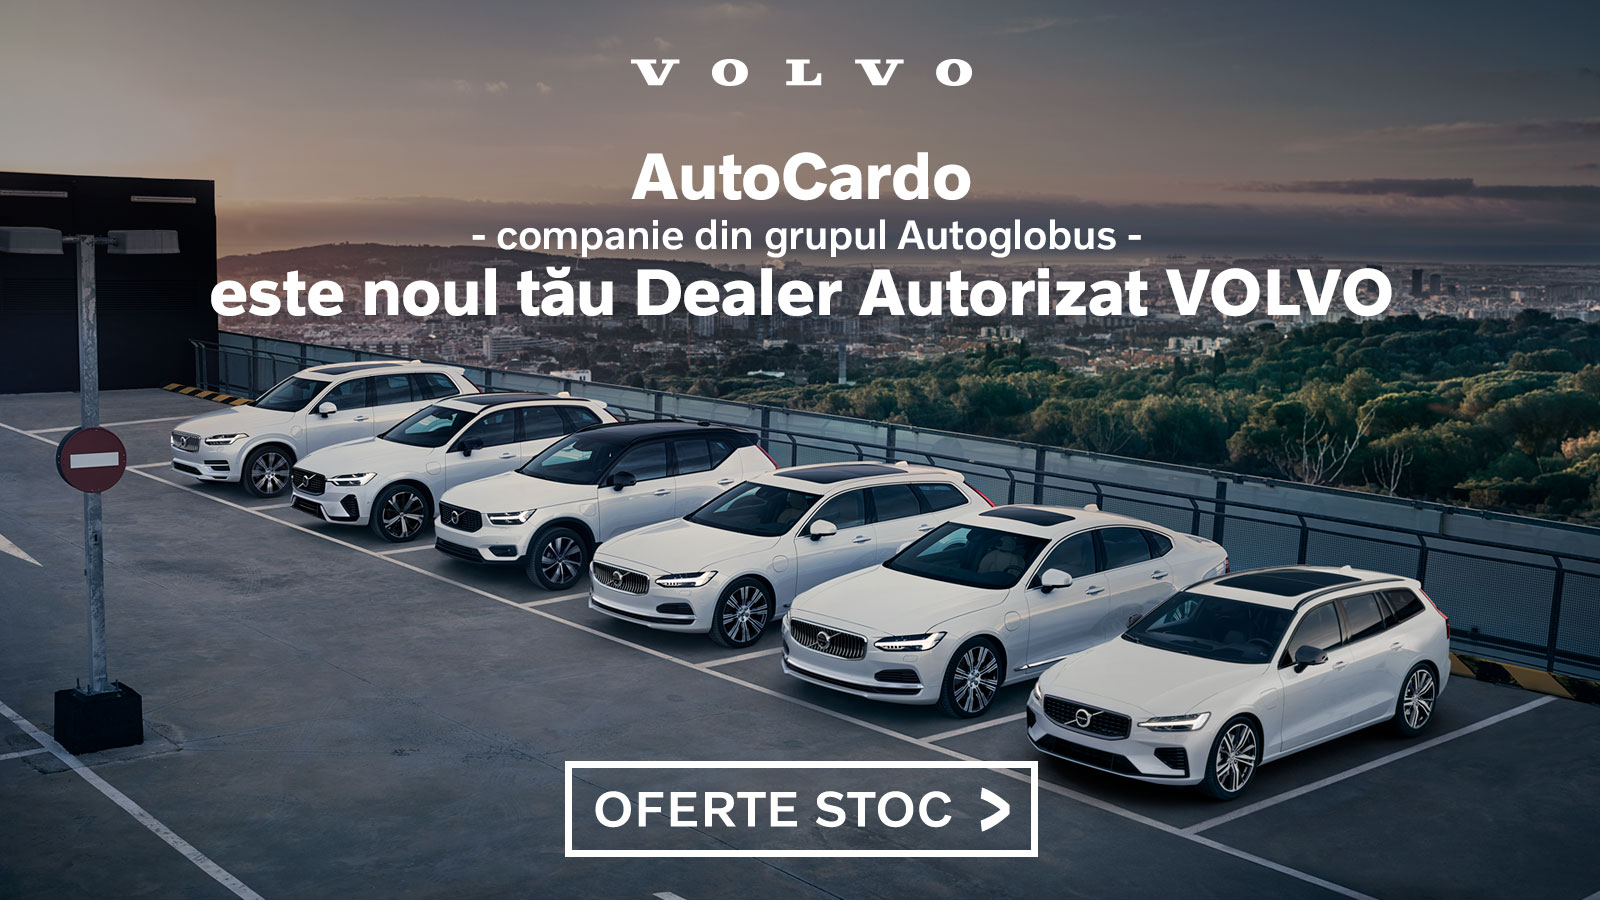 Oferte stoc Volvo AutoCardo